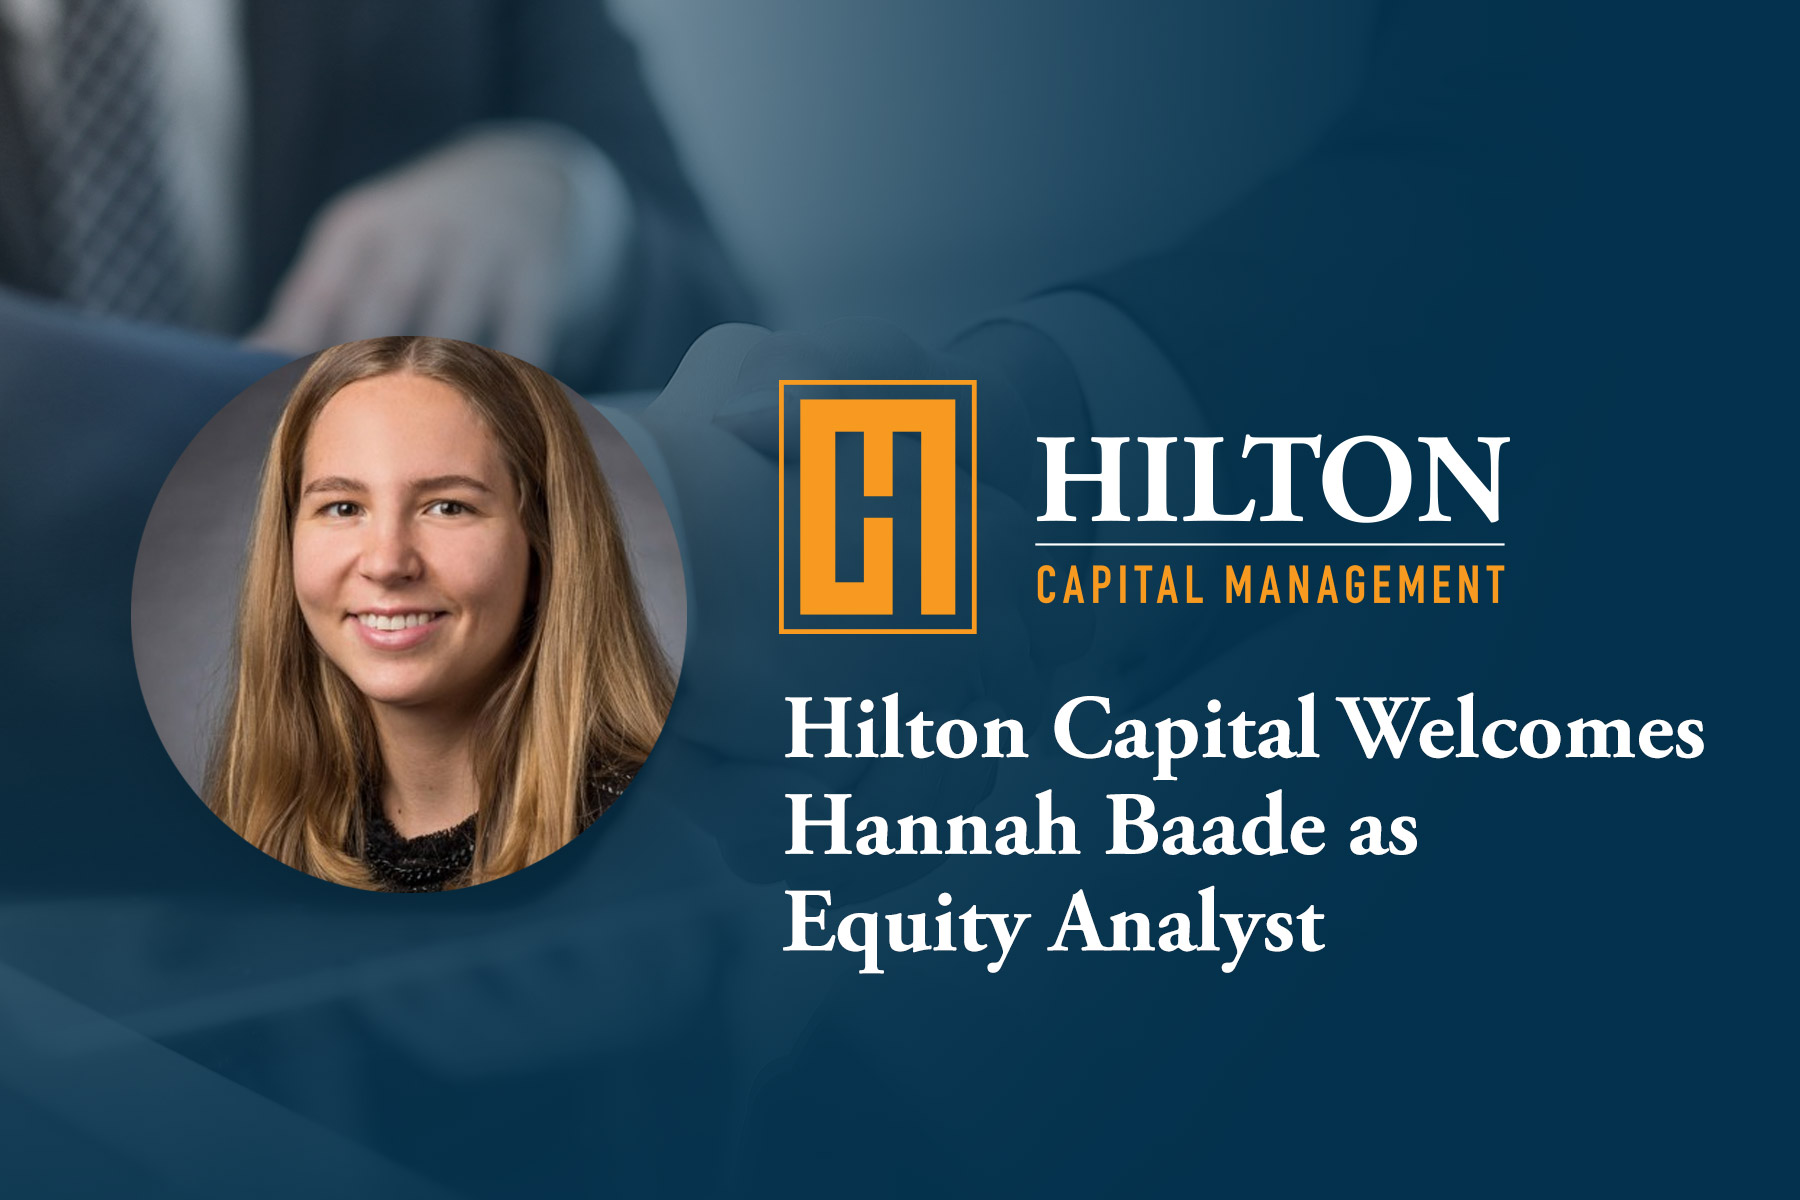 Hilton Capital Welcomes Hannah Baade as Equity Analyst